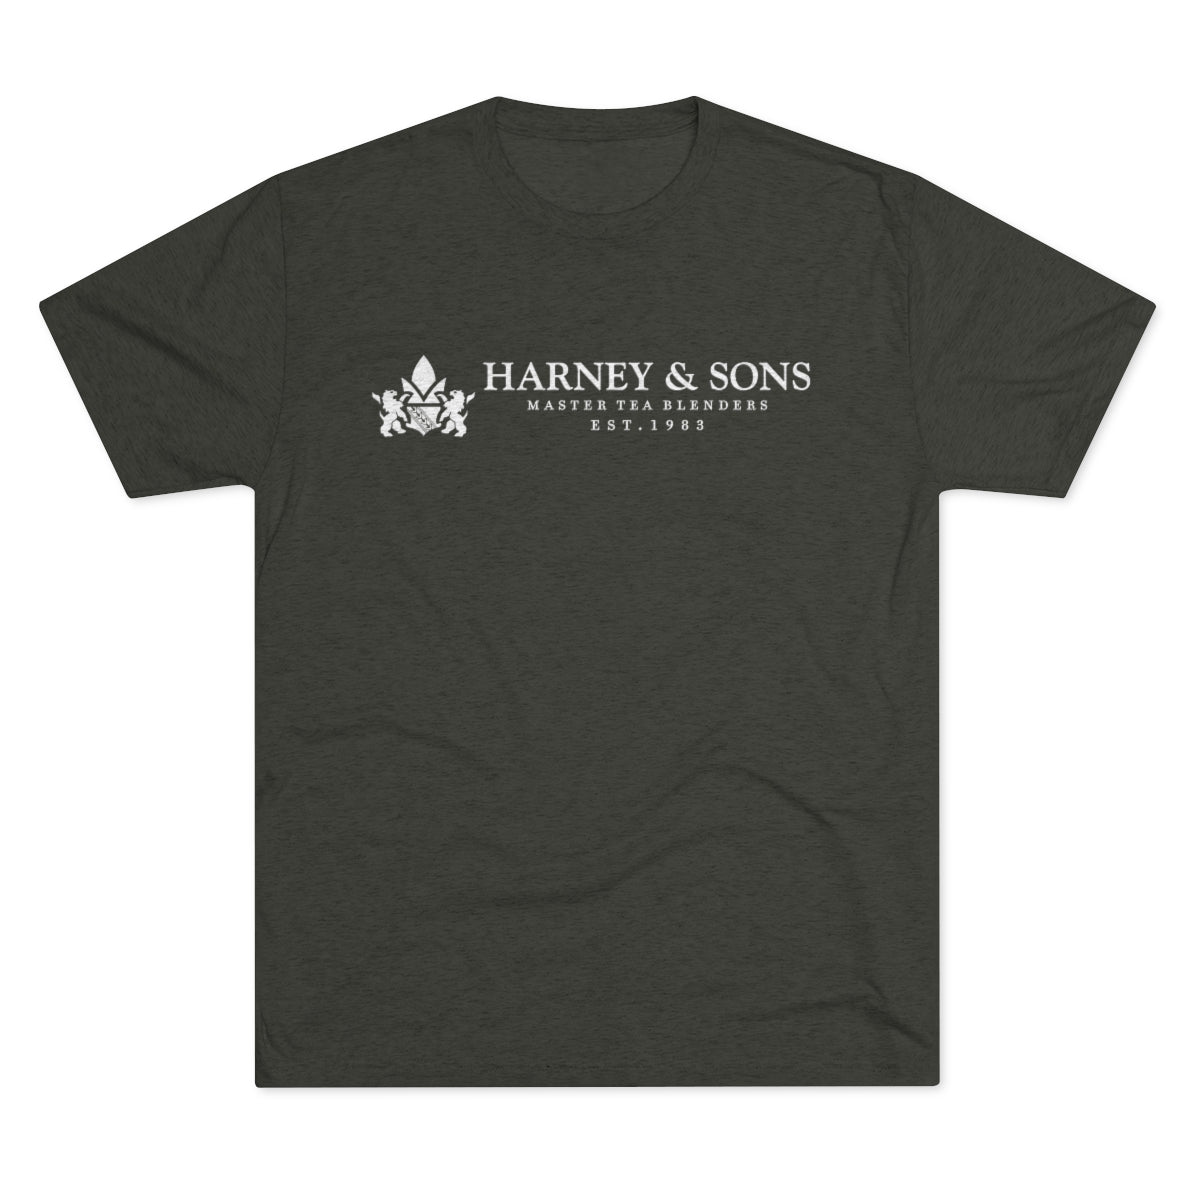 Harney & Sons - Est. 1983 Graphic Tee - Tri-Blend Macchiato S - Harney & Sons Fine Teas